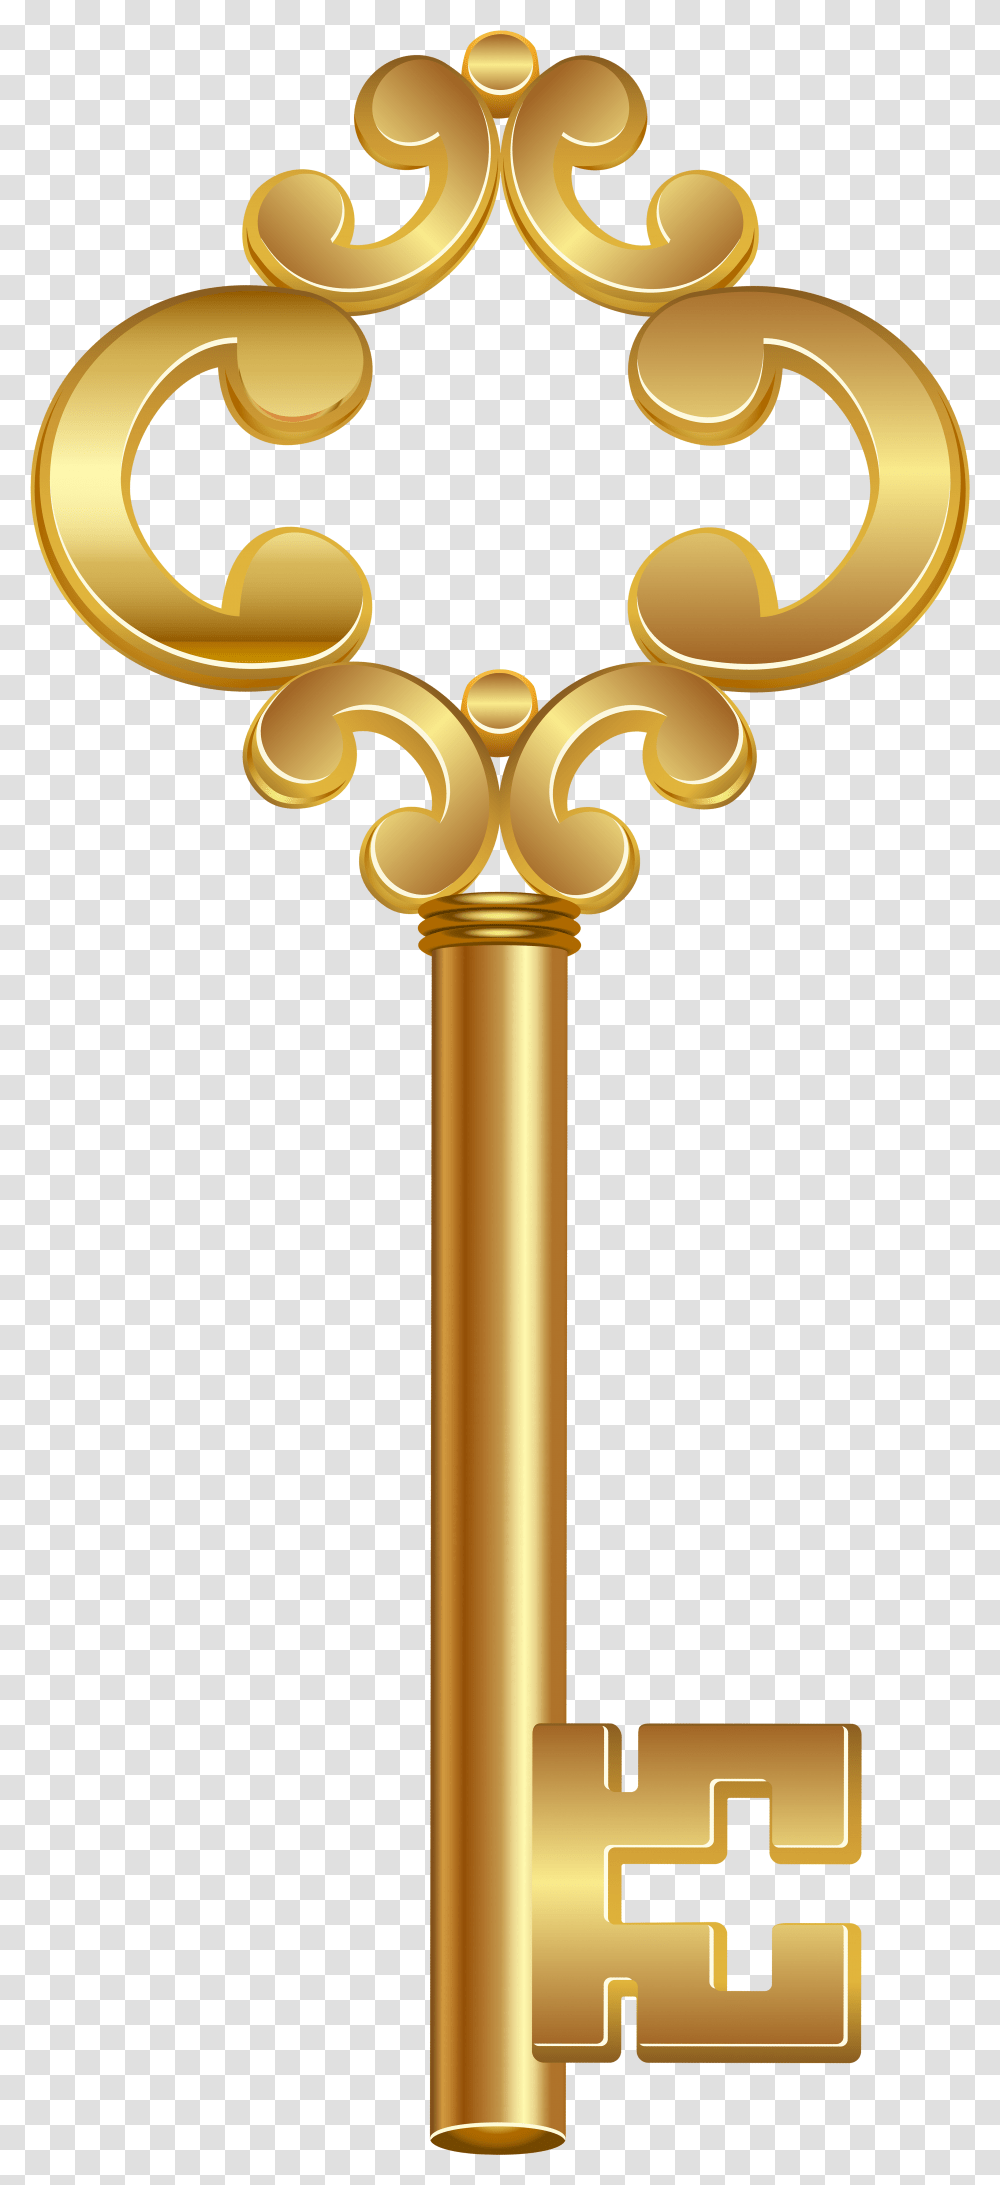 Key Clipart Gold Key Free Key Clipart, Cross, Emblem, Trophy Transparent Png